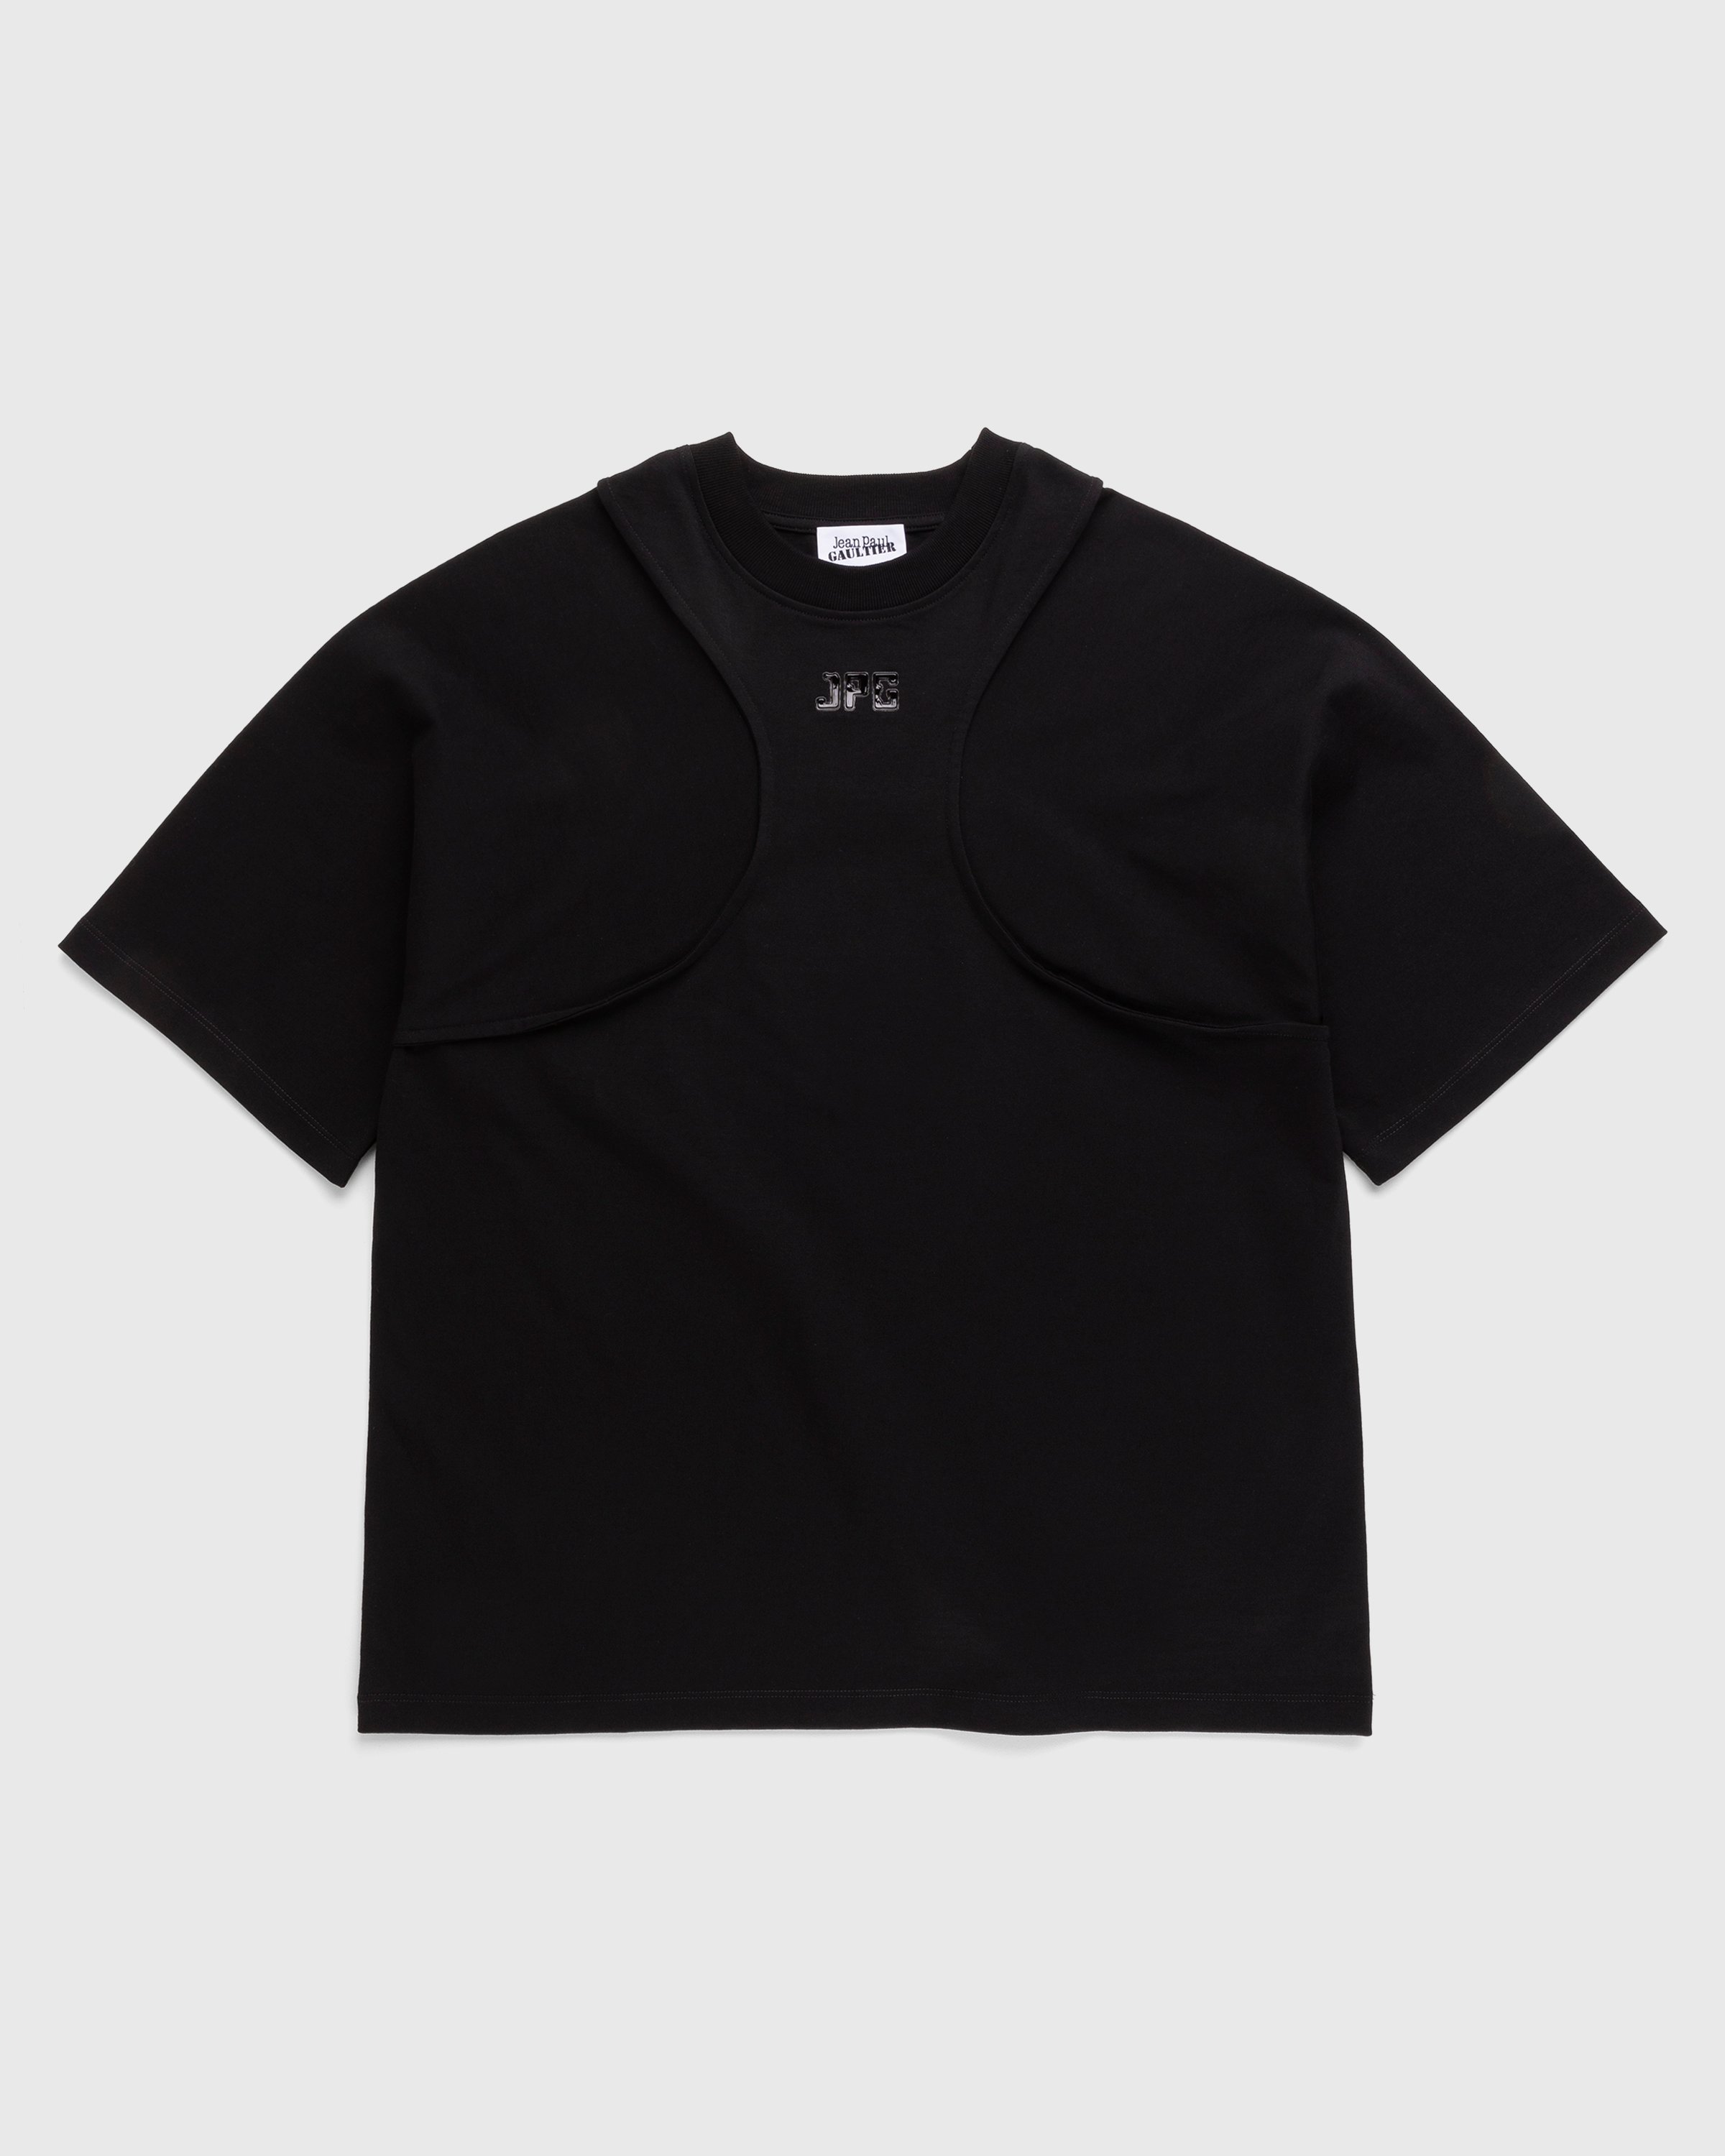 Jean Paul Gaultier - JPG T-Shirt Black - Clothing - Black - Image 1